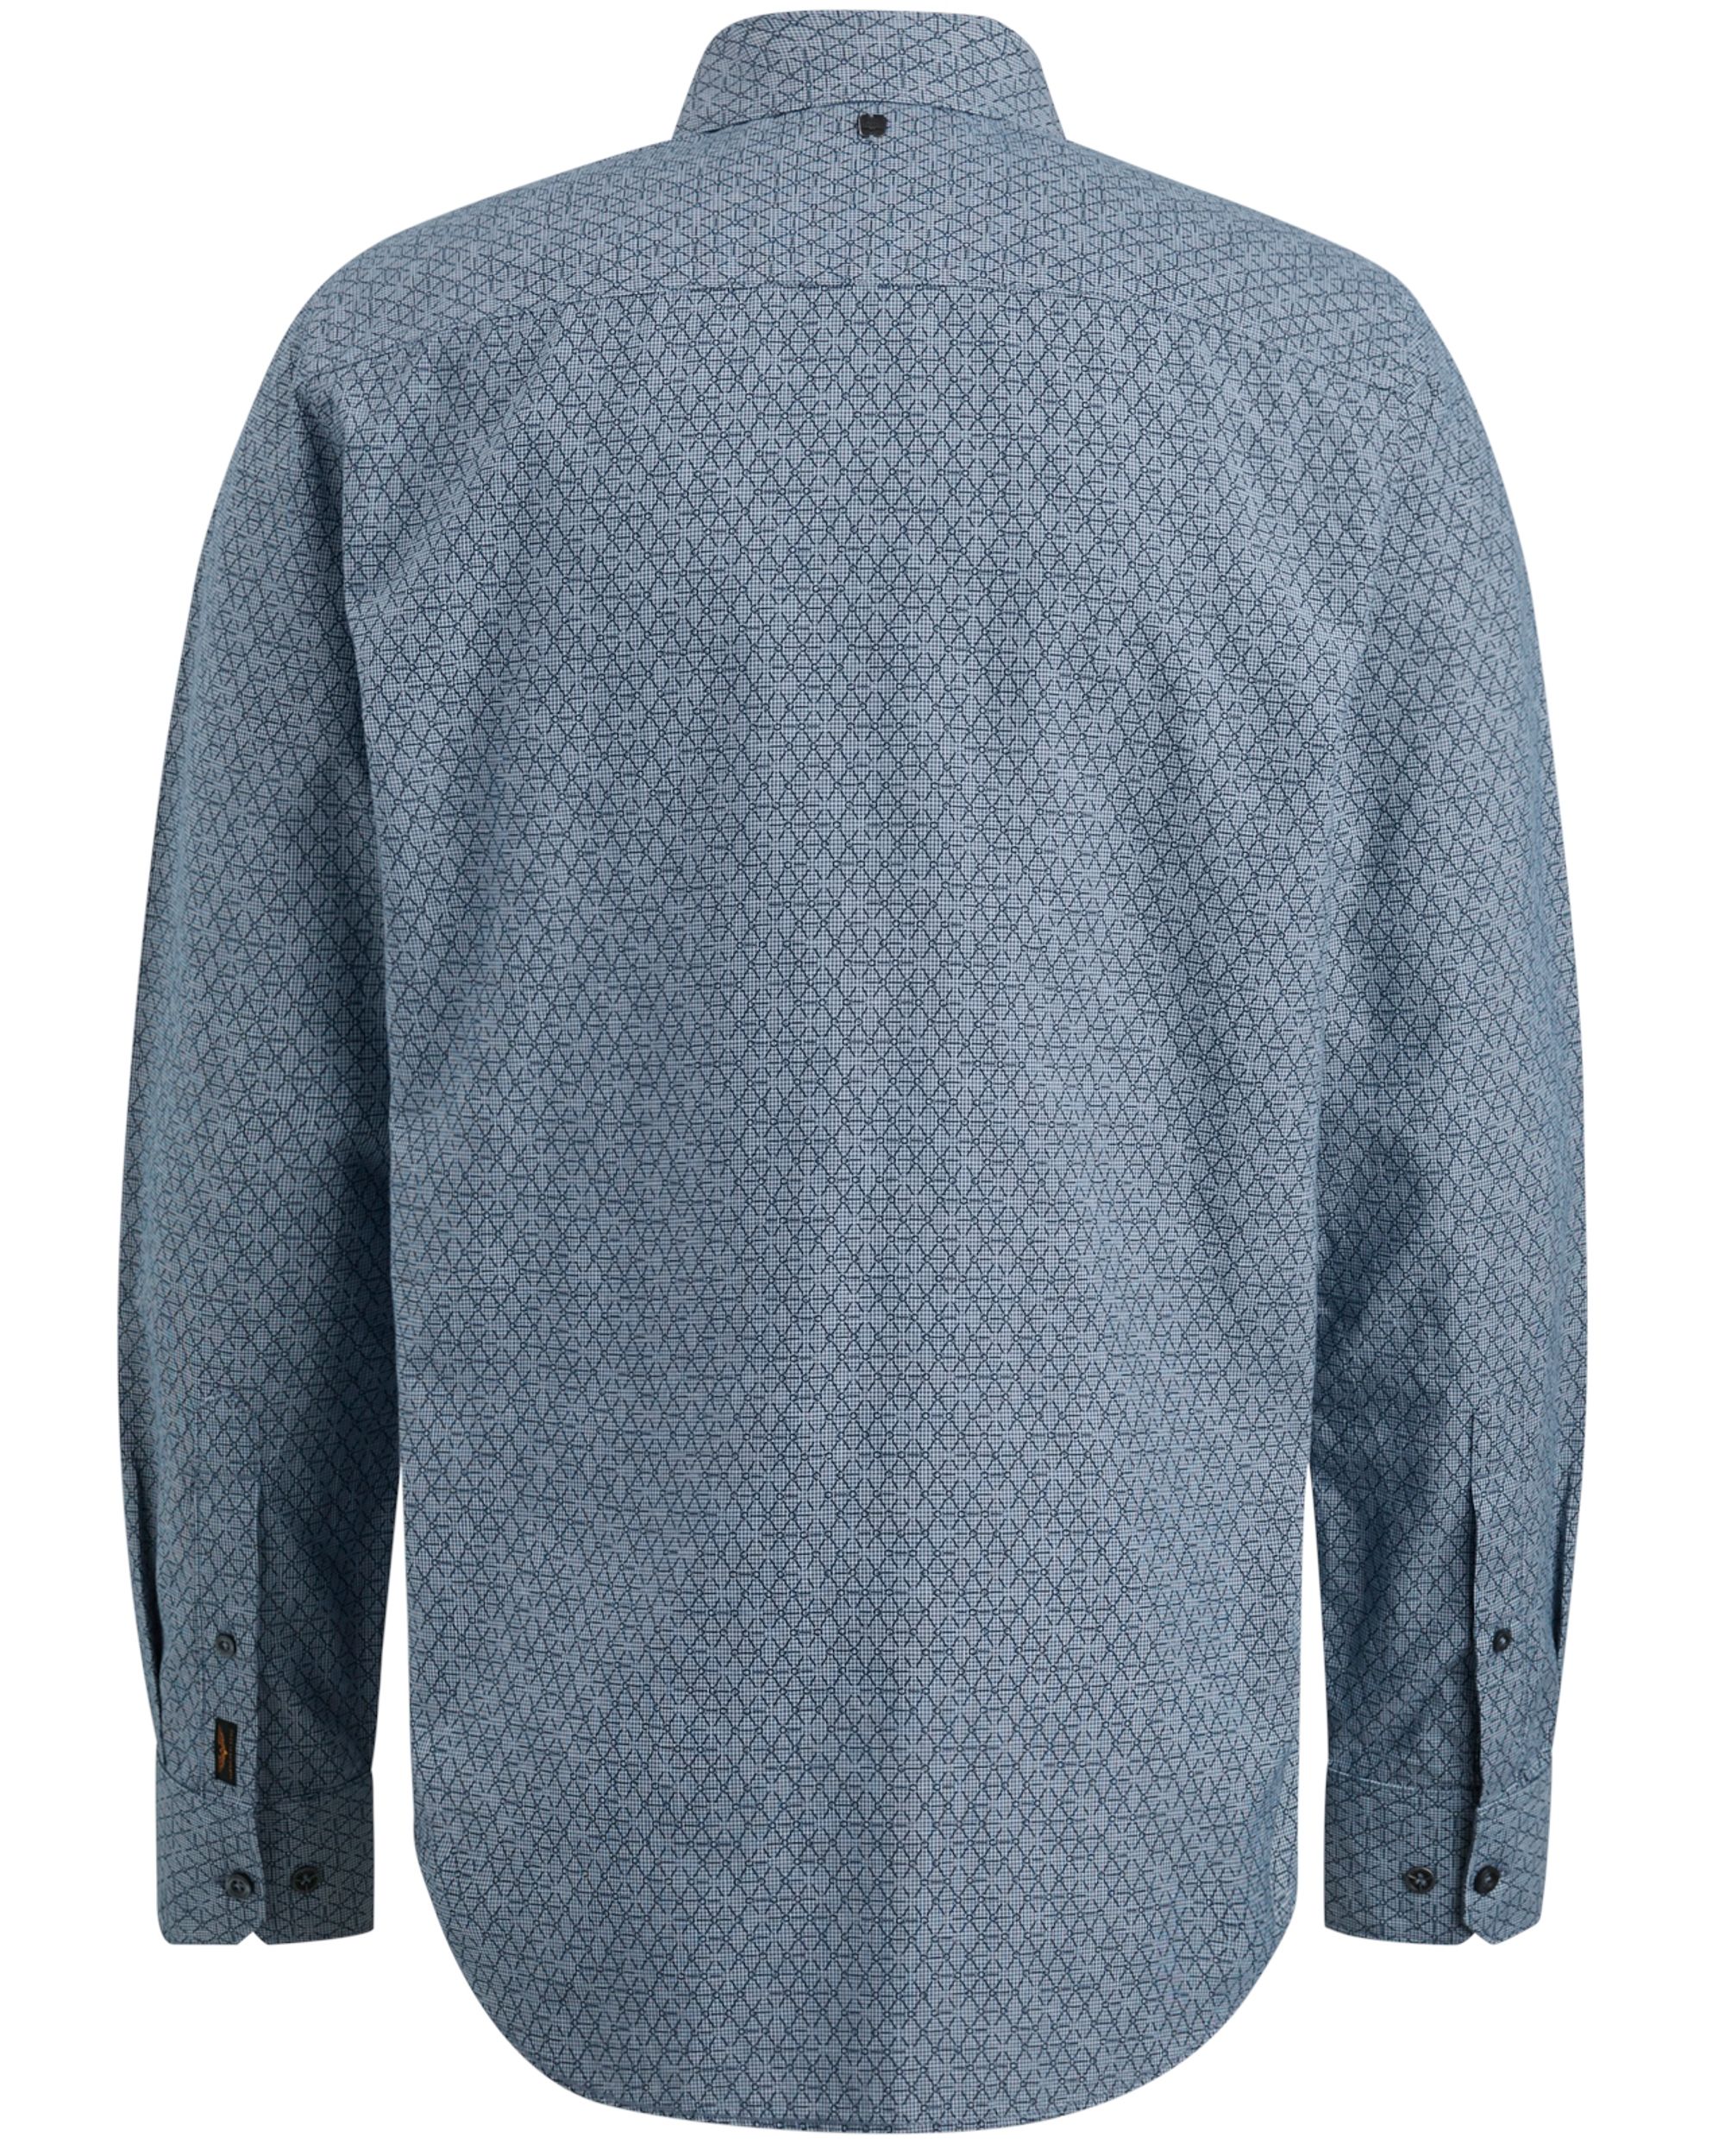 PME Legend Casual Overhemd LM Blauw 094870-001-L